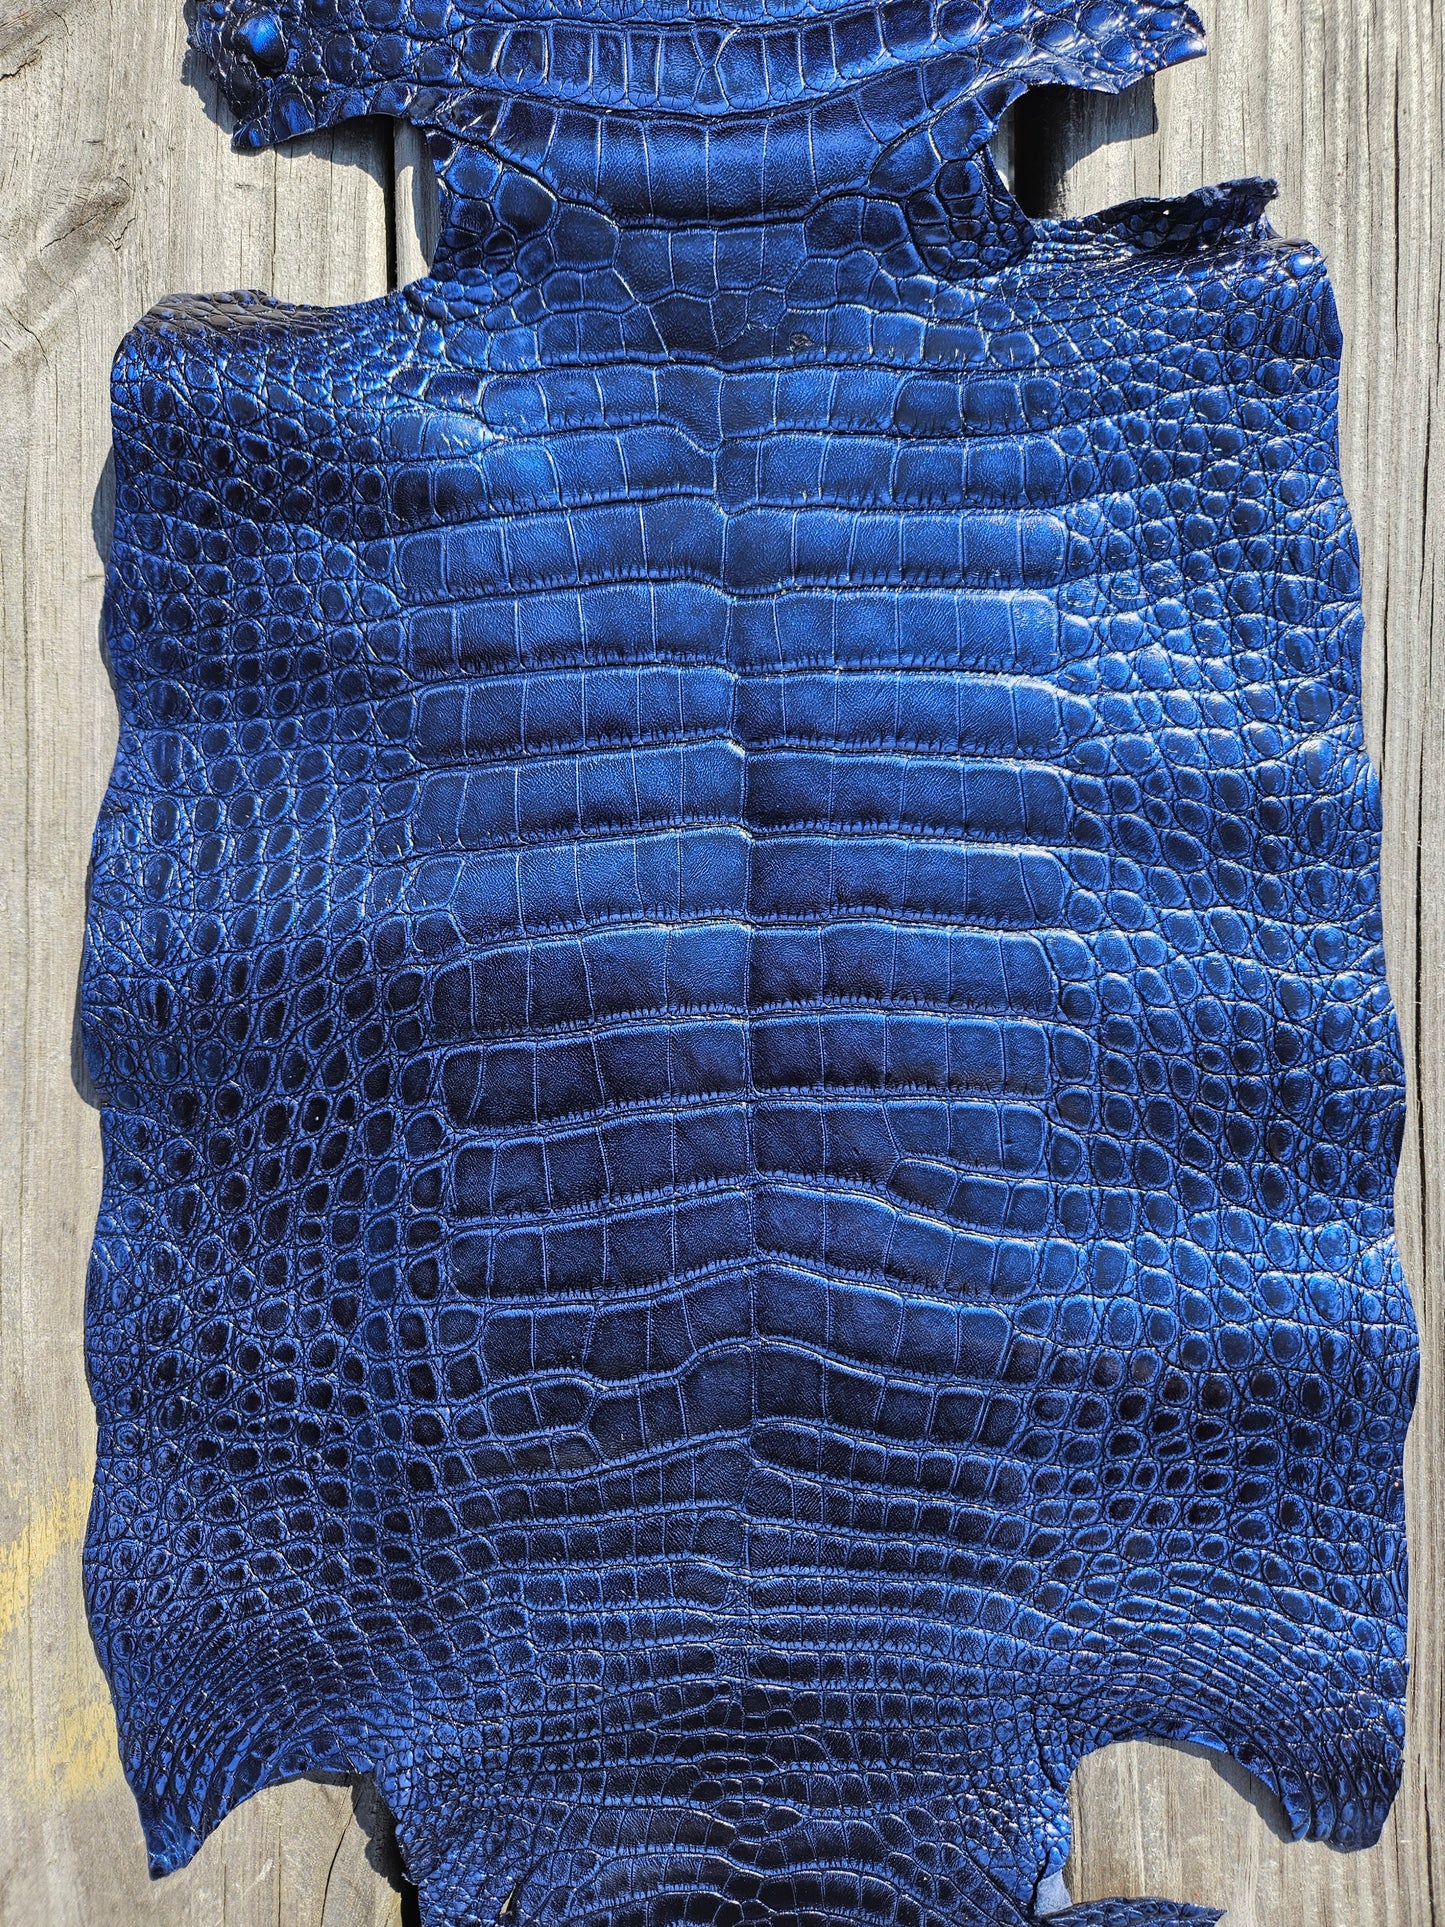 Alligator Skin - 27cm (belly only) - Grade 2 Metallic Blue